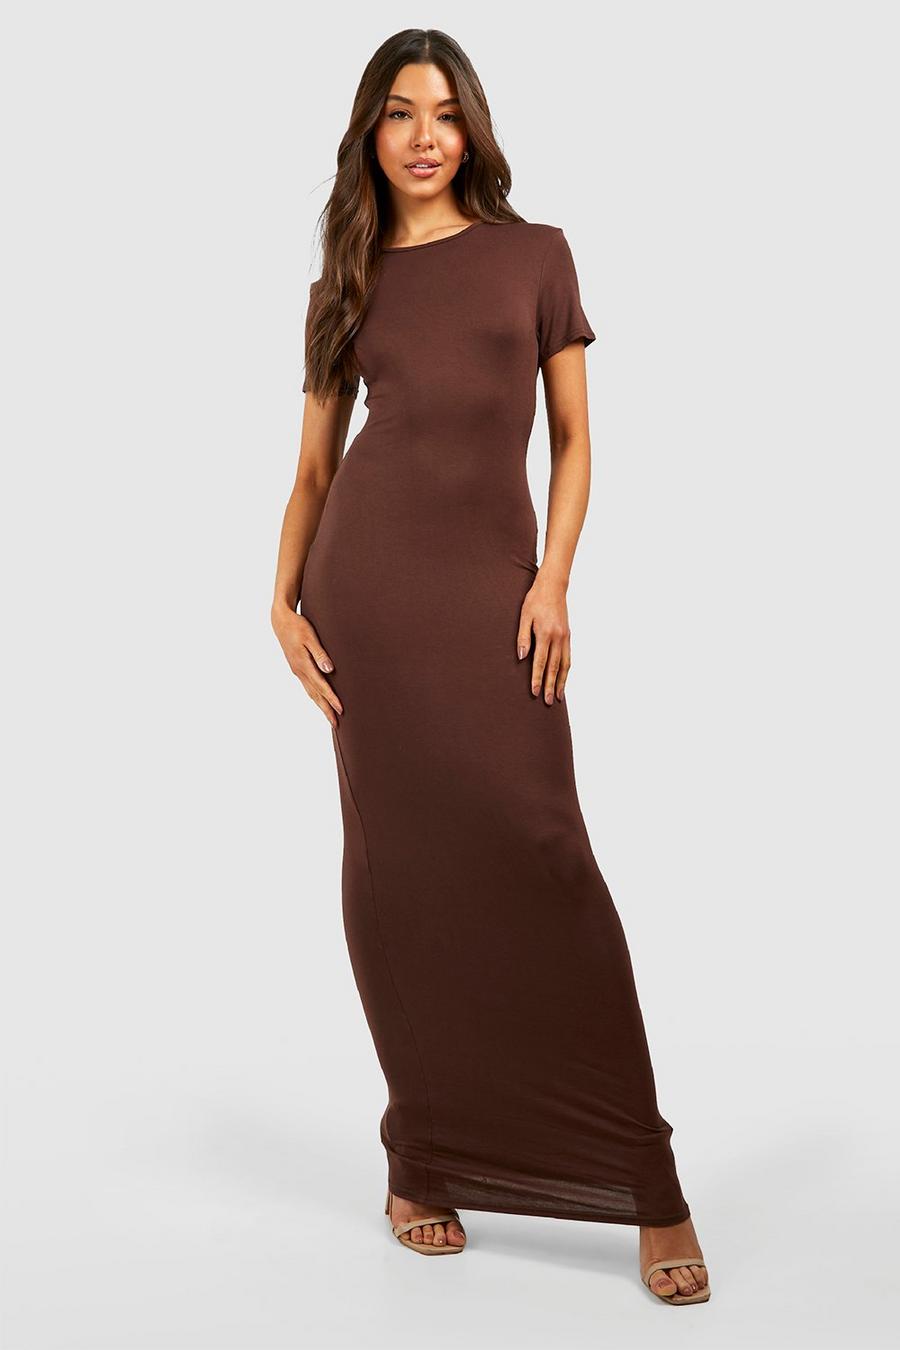 Chocolate brown Short Sleeve Basic Maxi Dress